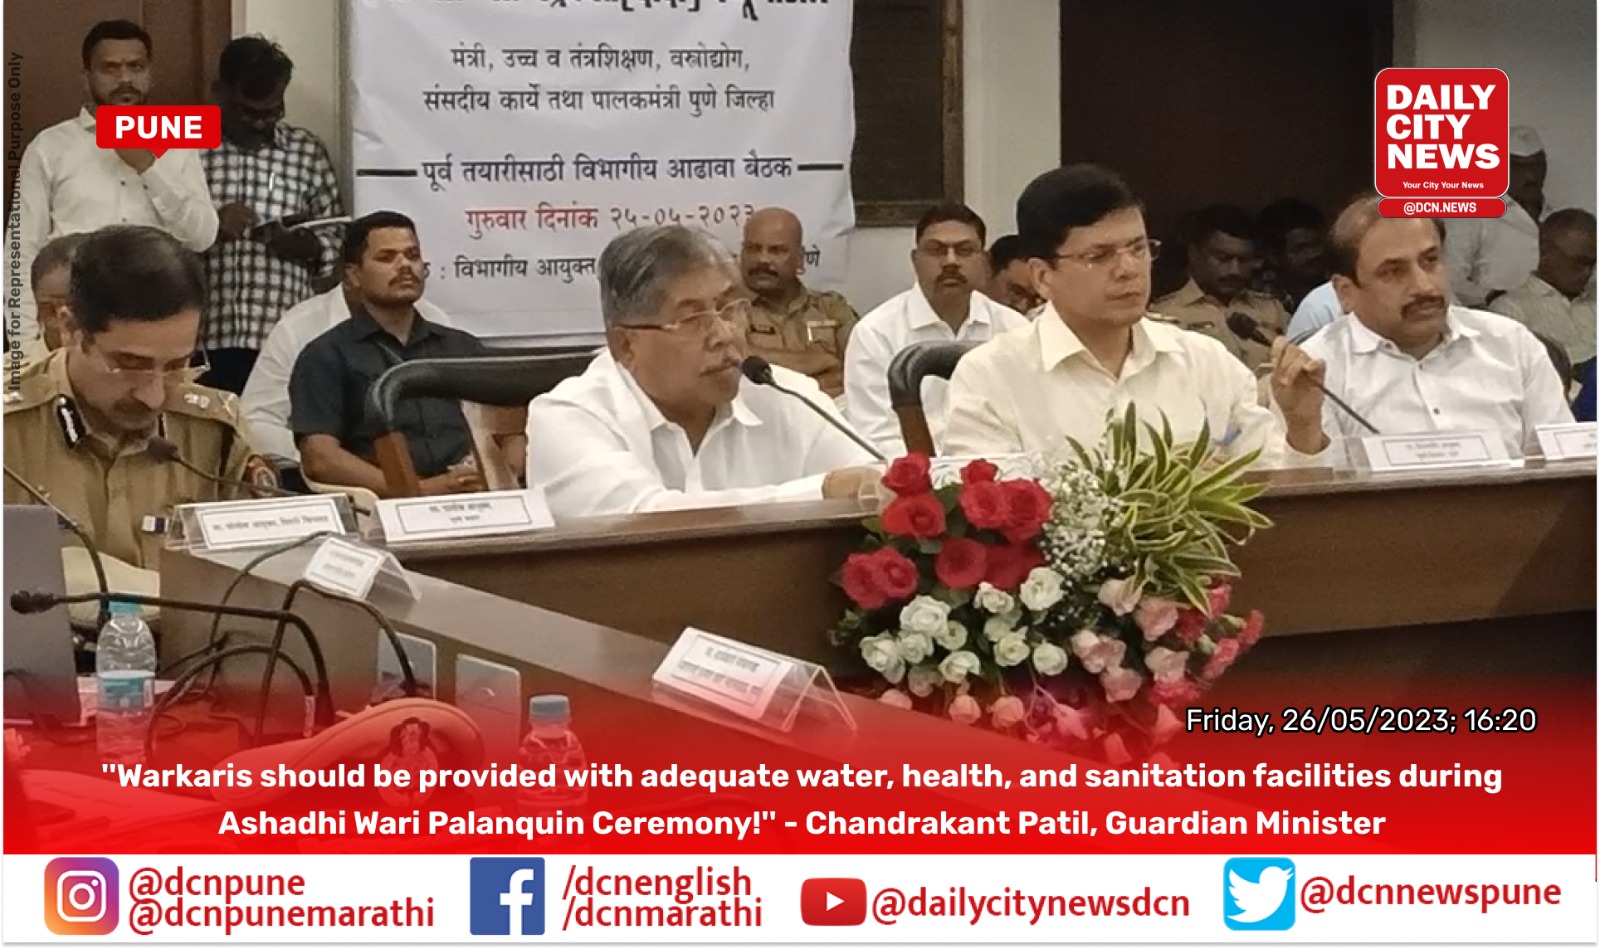 ''Warkaris should be provided with adequate water, health, and sanitation facilities during Ashadhi Wari Palanquin Ceremony!'' - Chandrakant Patil, Guardian Minister